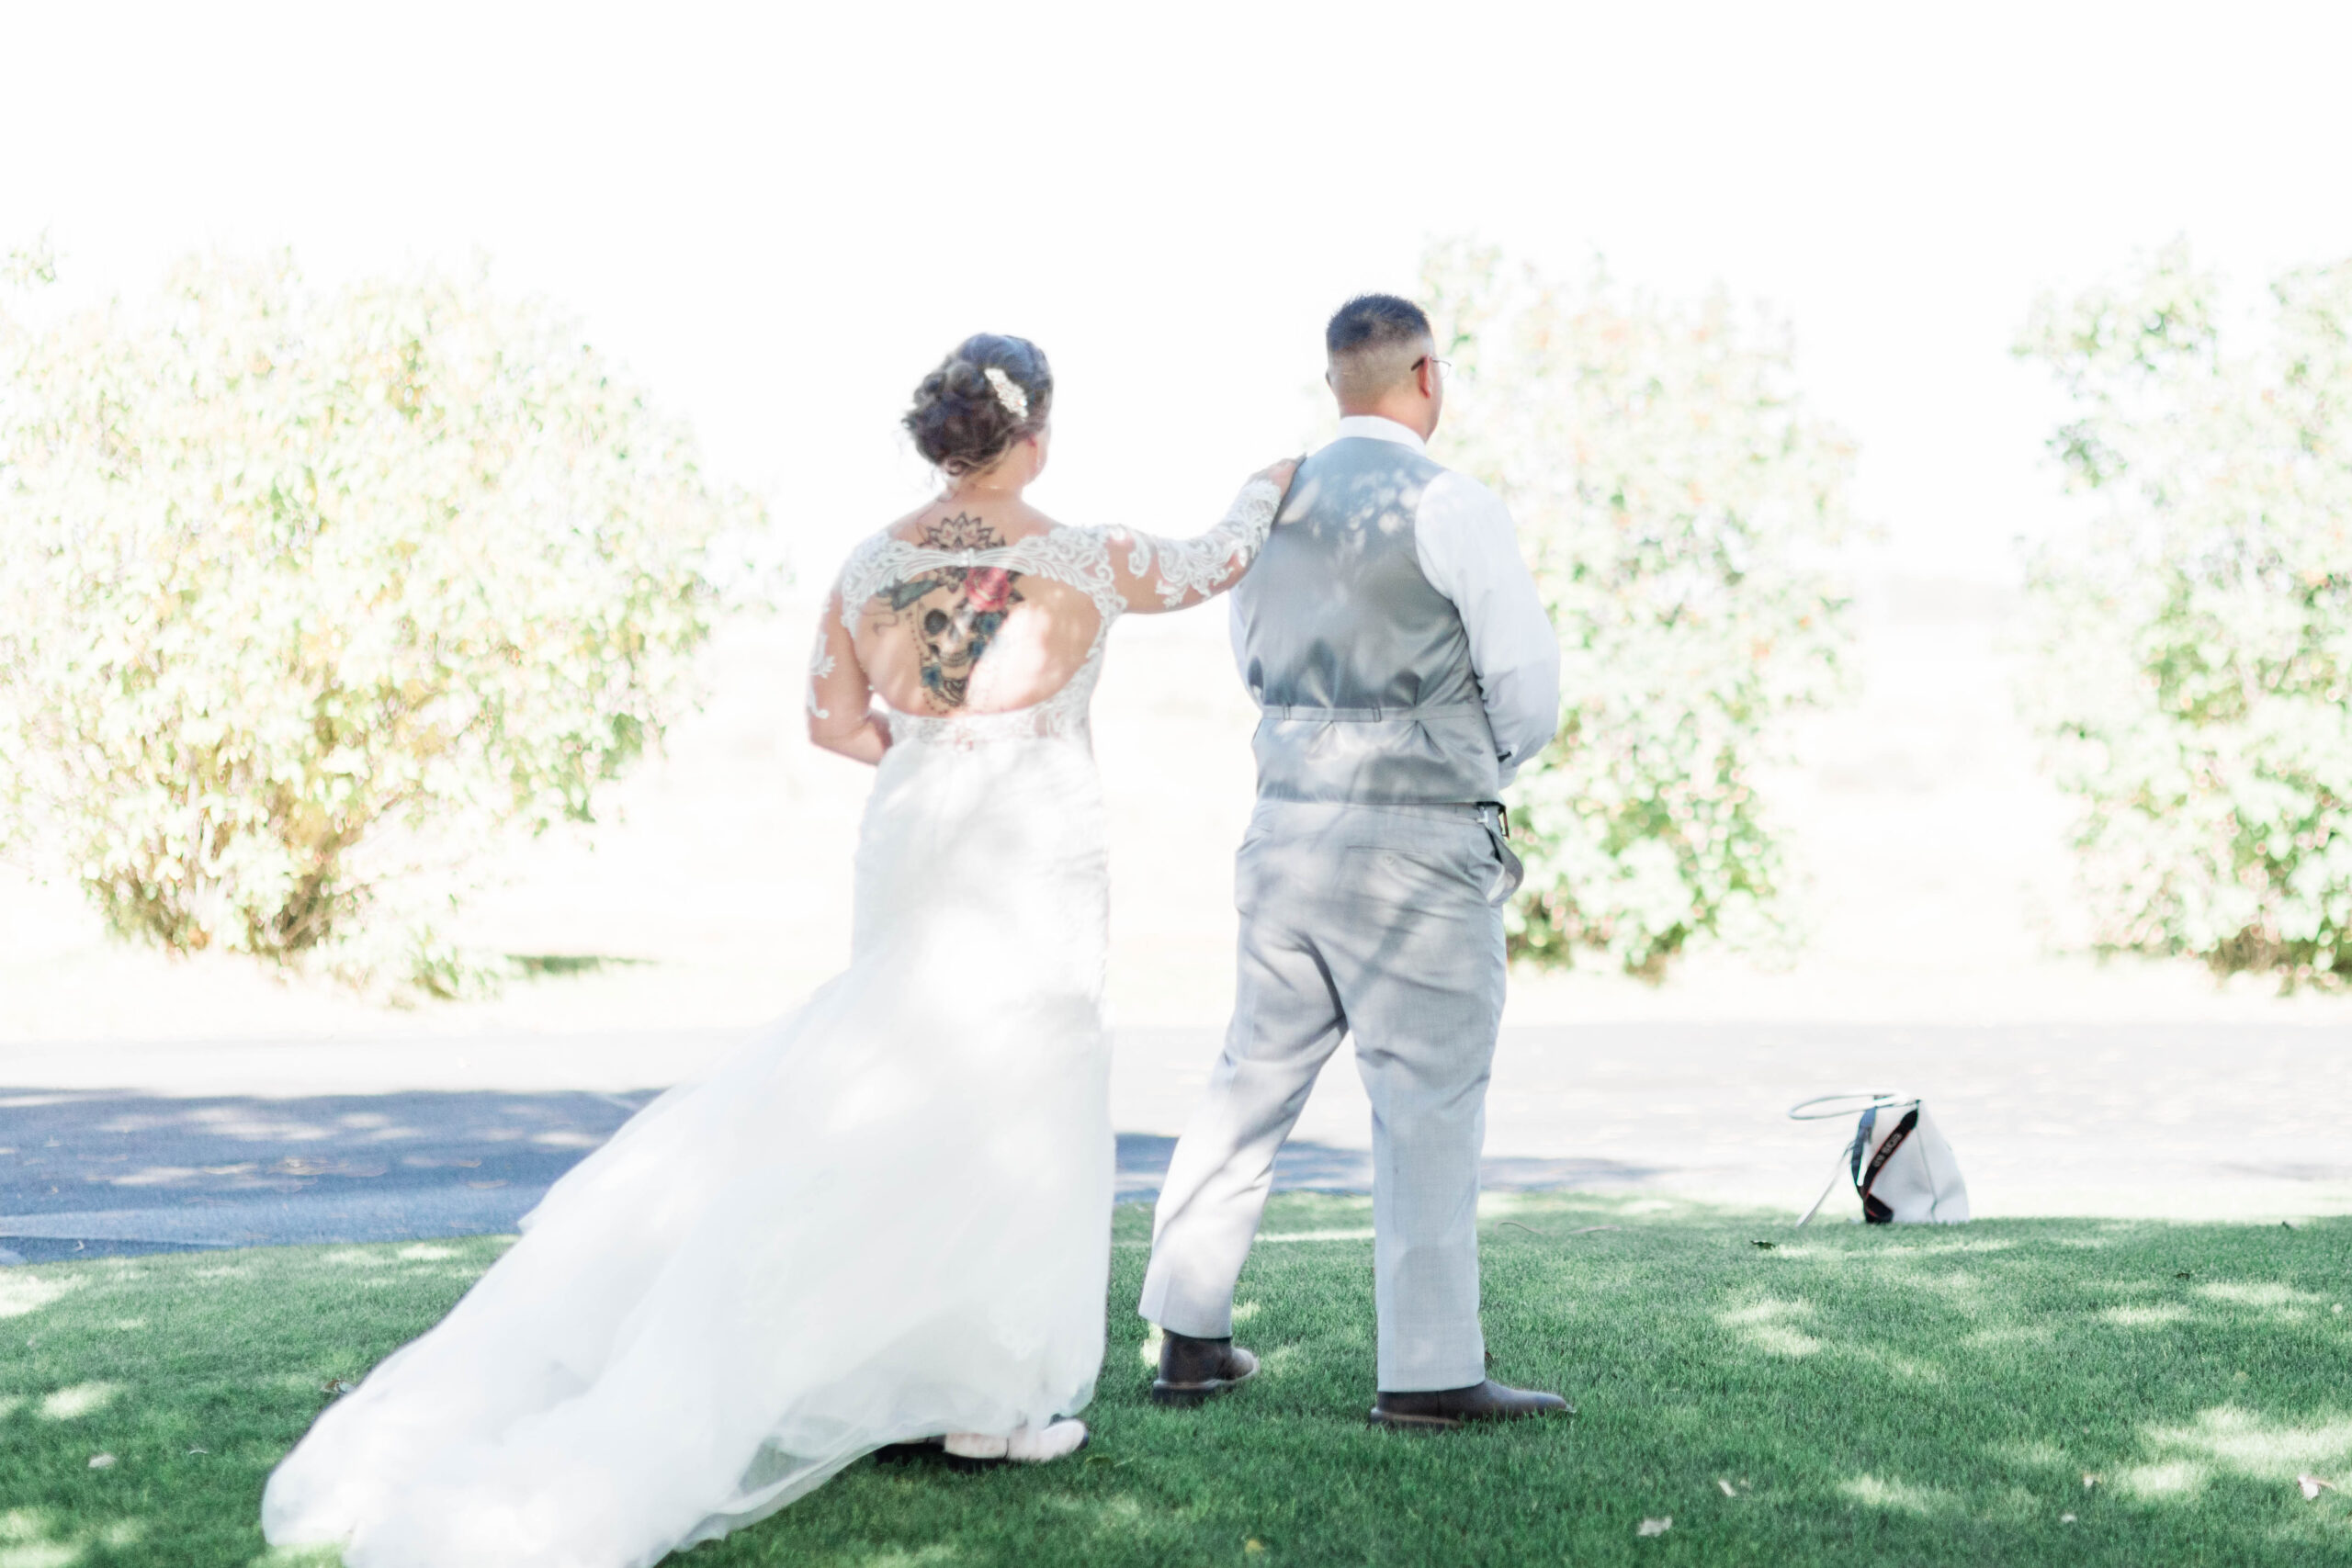 Boise wedding photographer captures bride and groom during first look at Boise wedding first look alternatives